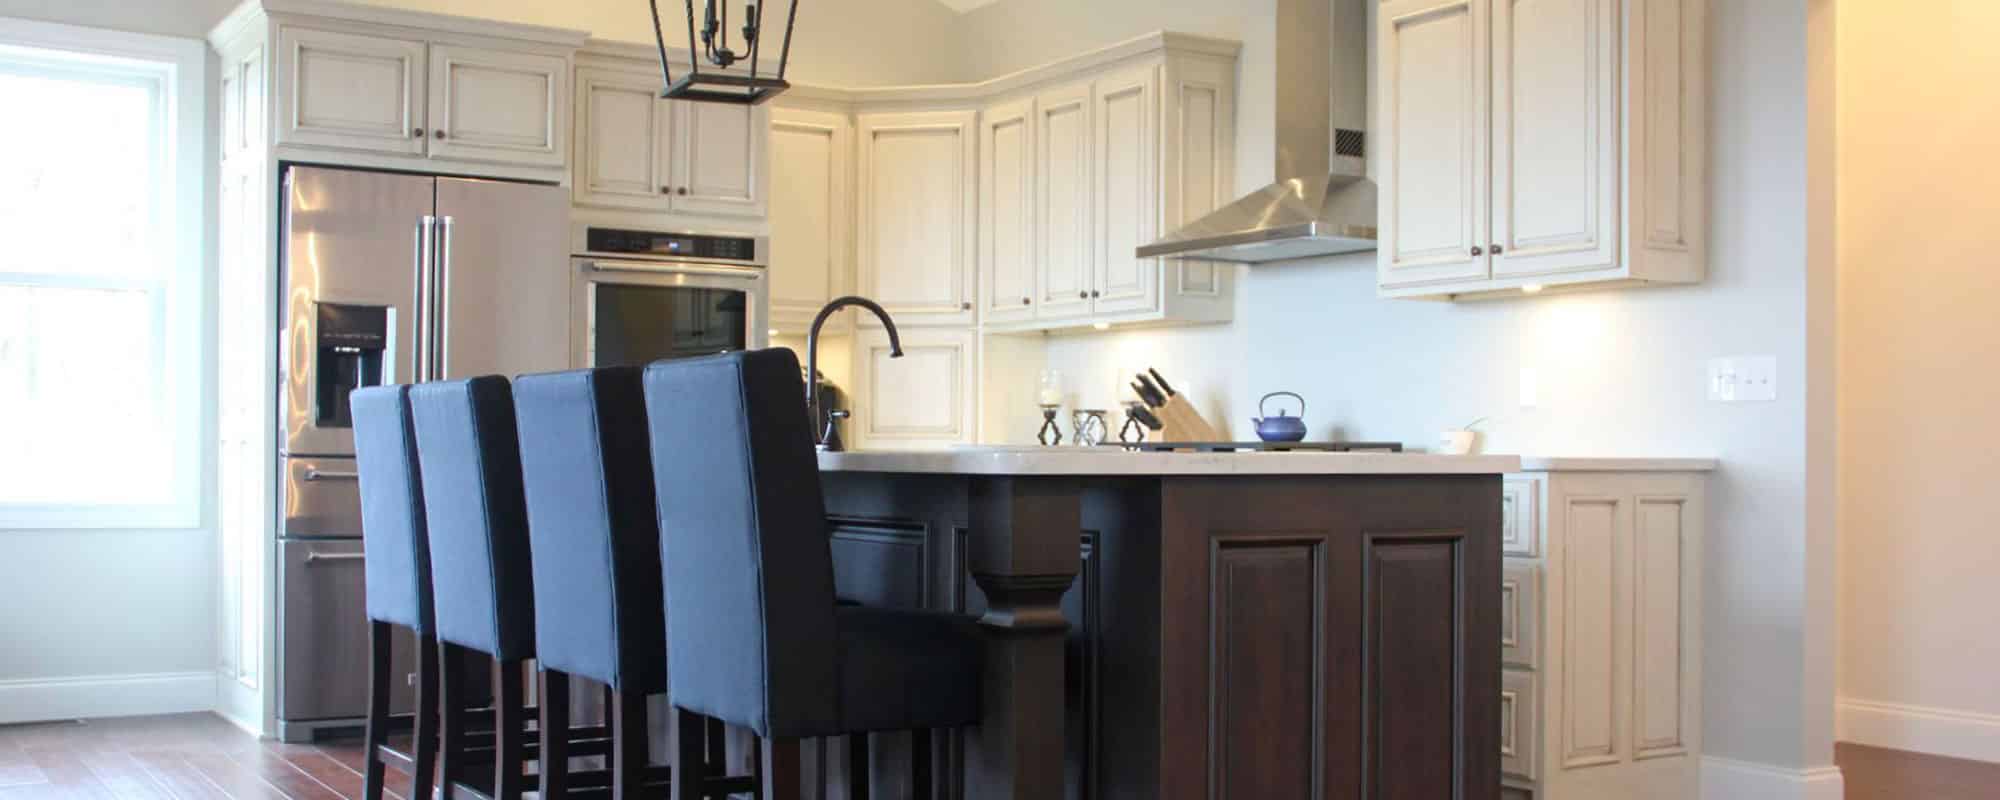 custom kitchen cabinets contrasting island